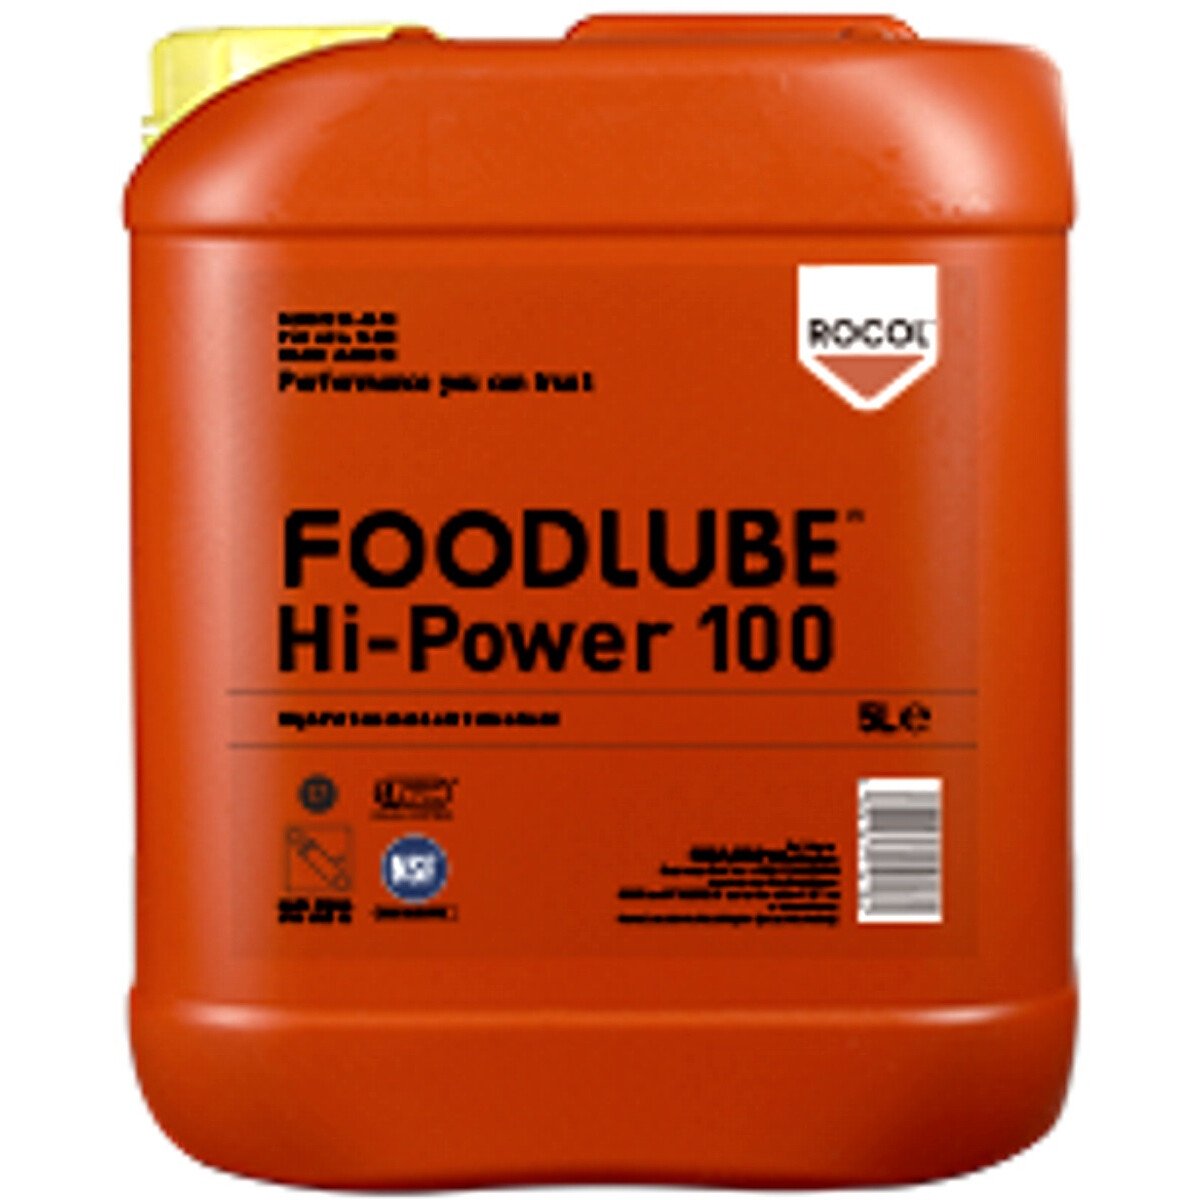 Rocol 15946 Foodlube Hi-Power 100 Lubricant (NSF Registered) 5ltr